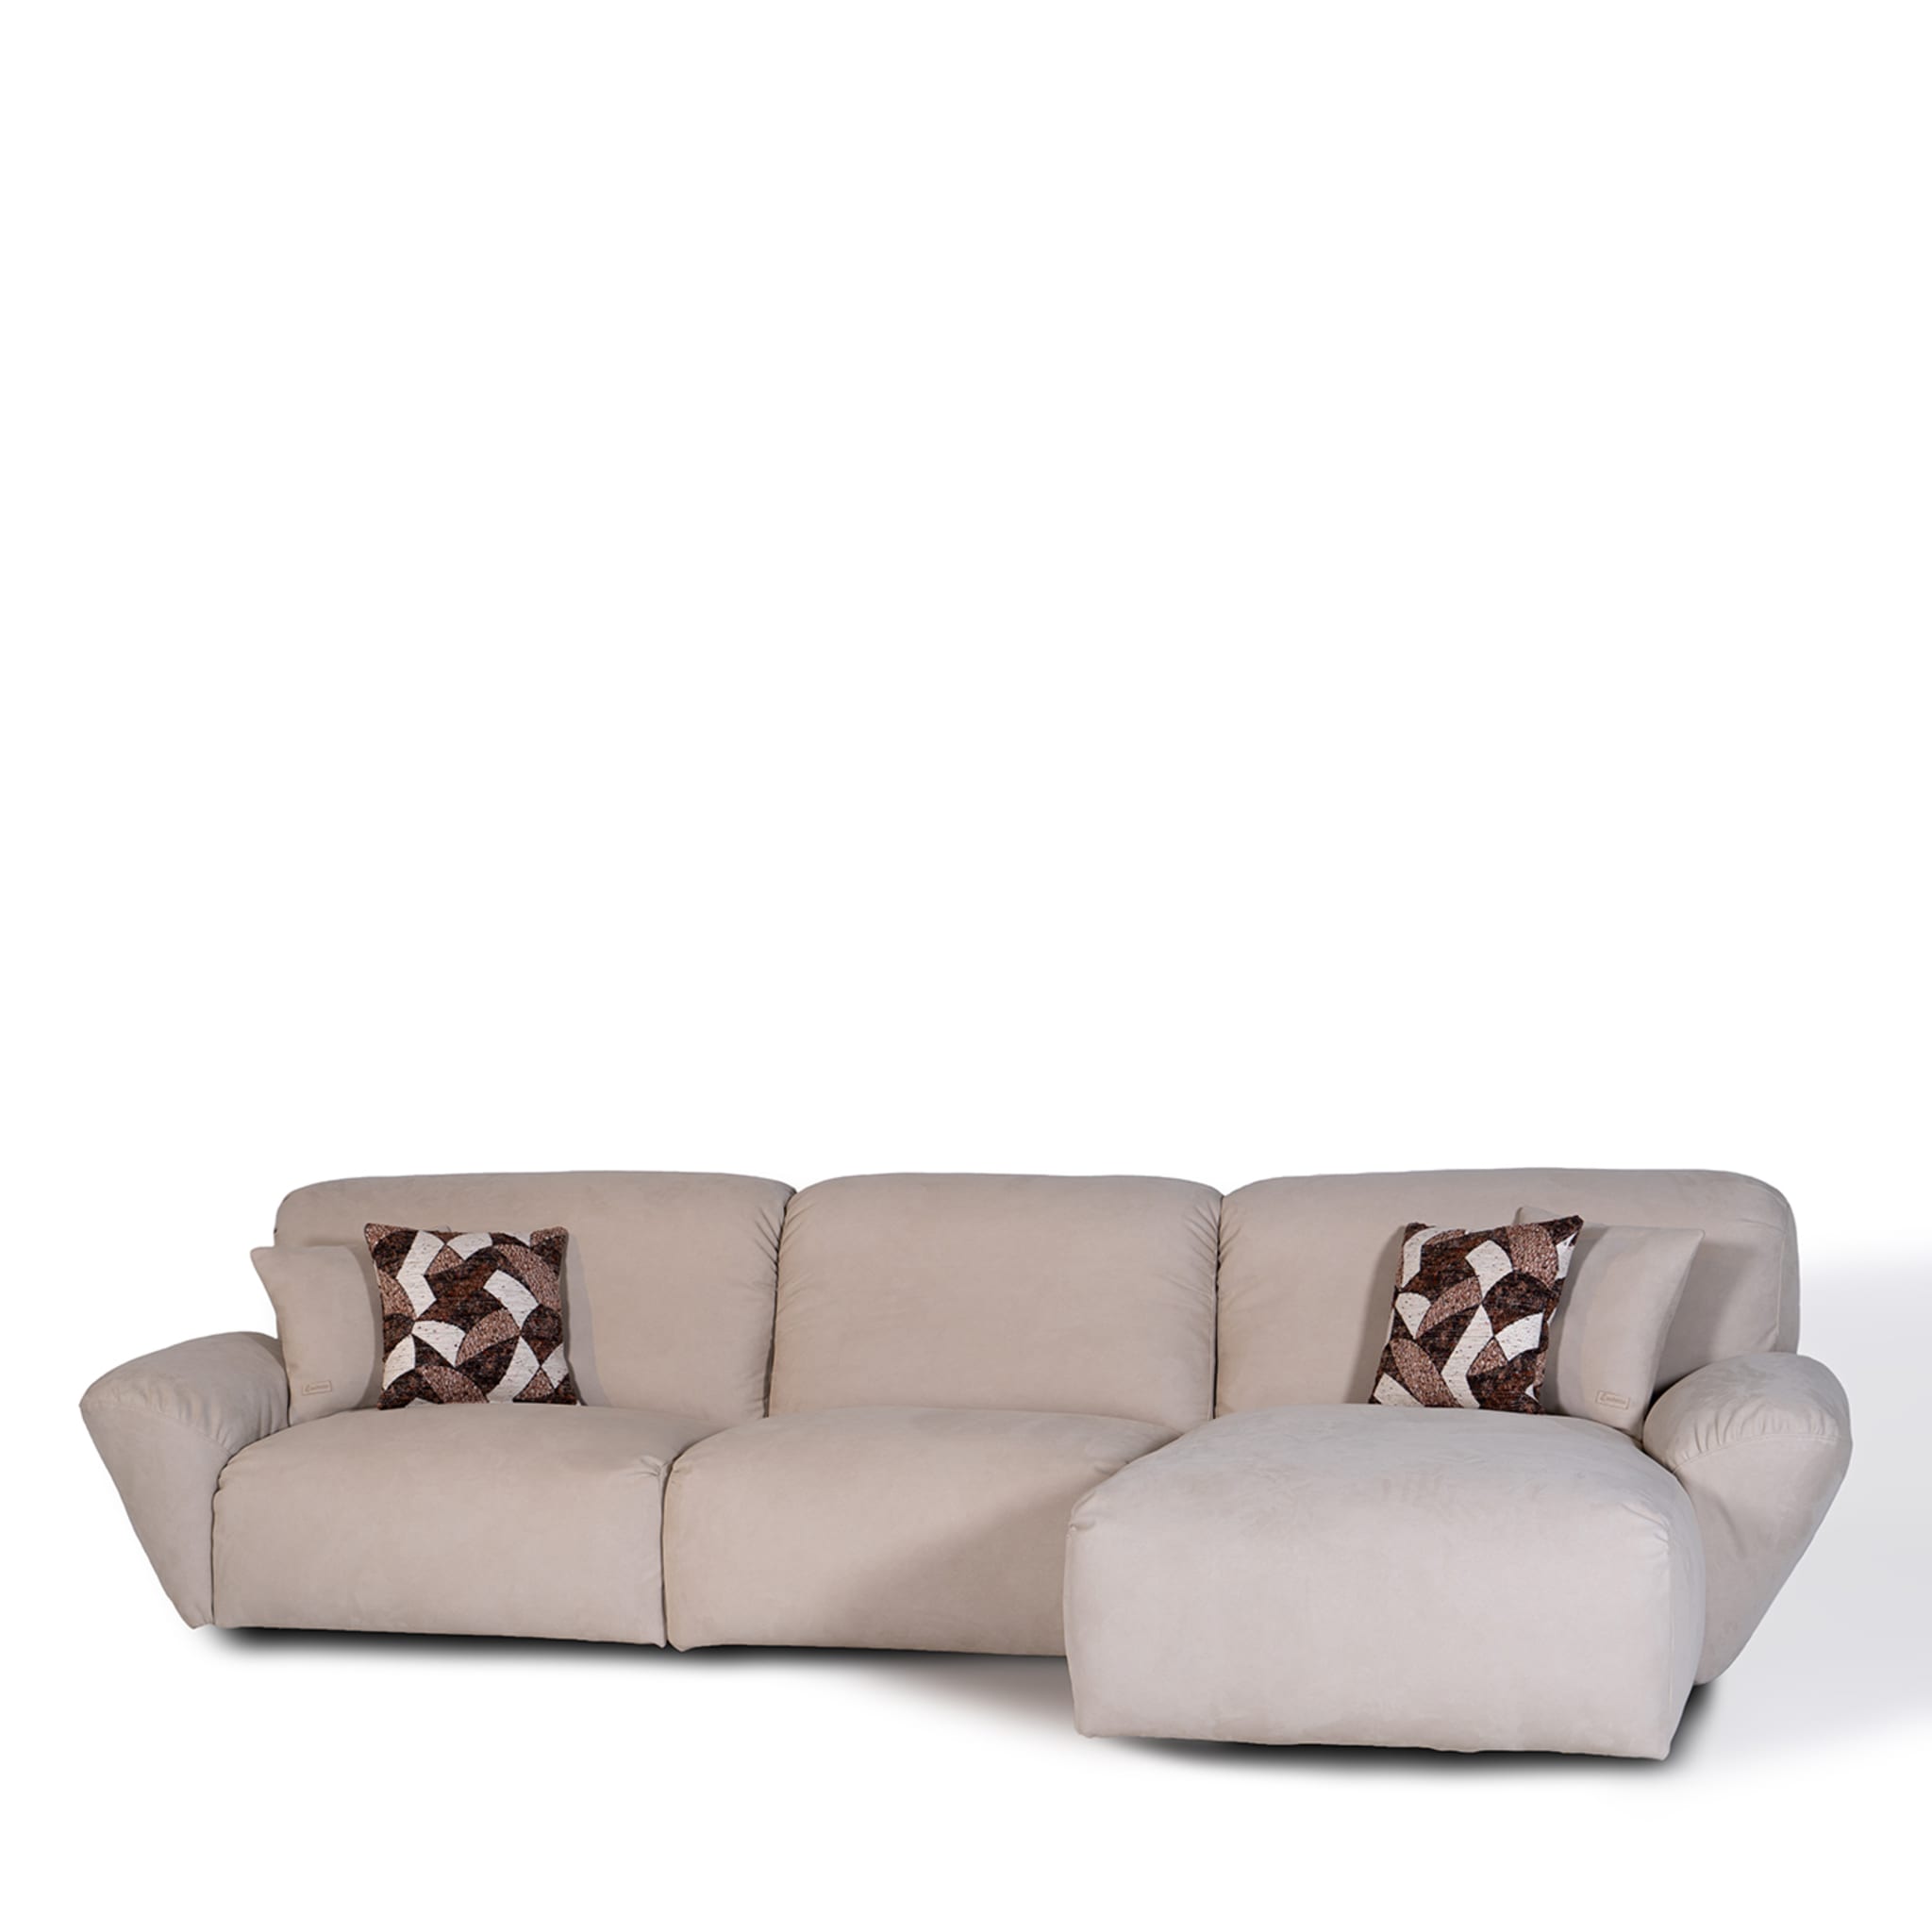 Beluga Beige 3-Seater Sofa by Marco & Giulio Mantellassi  - Alternative view 3